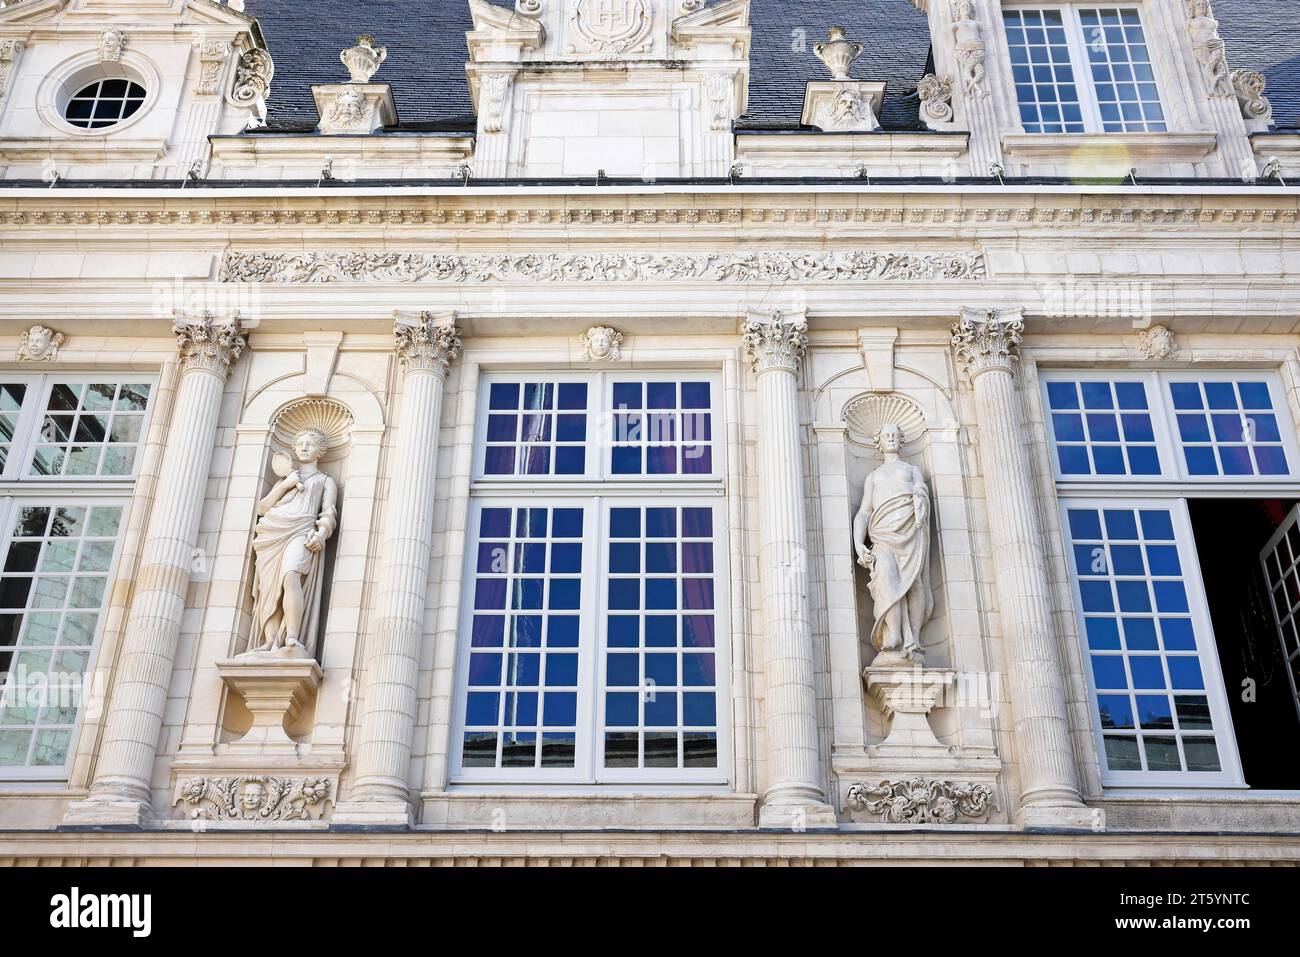 Historic Town Hall of La Rochelle, Hotel de Ville, decorative facade with sculptures, Charente-Maritime department, France Stock Photo